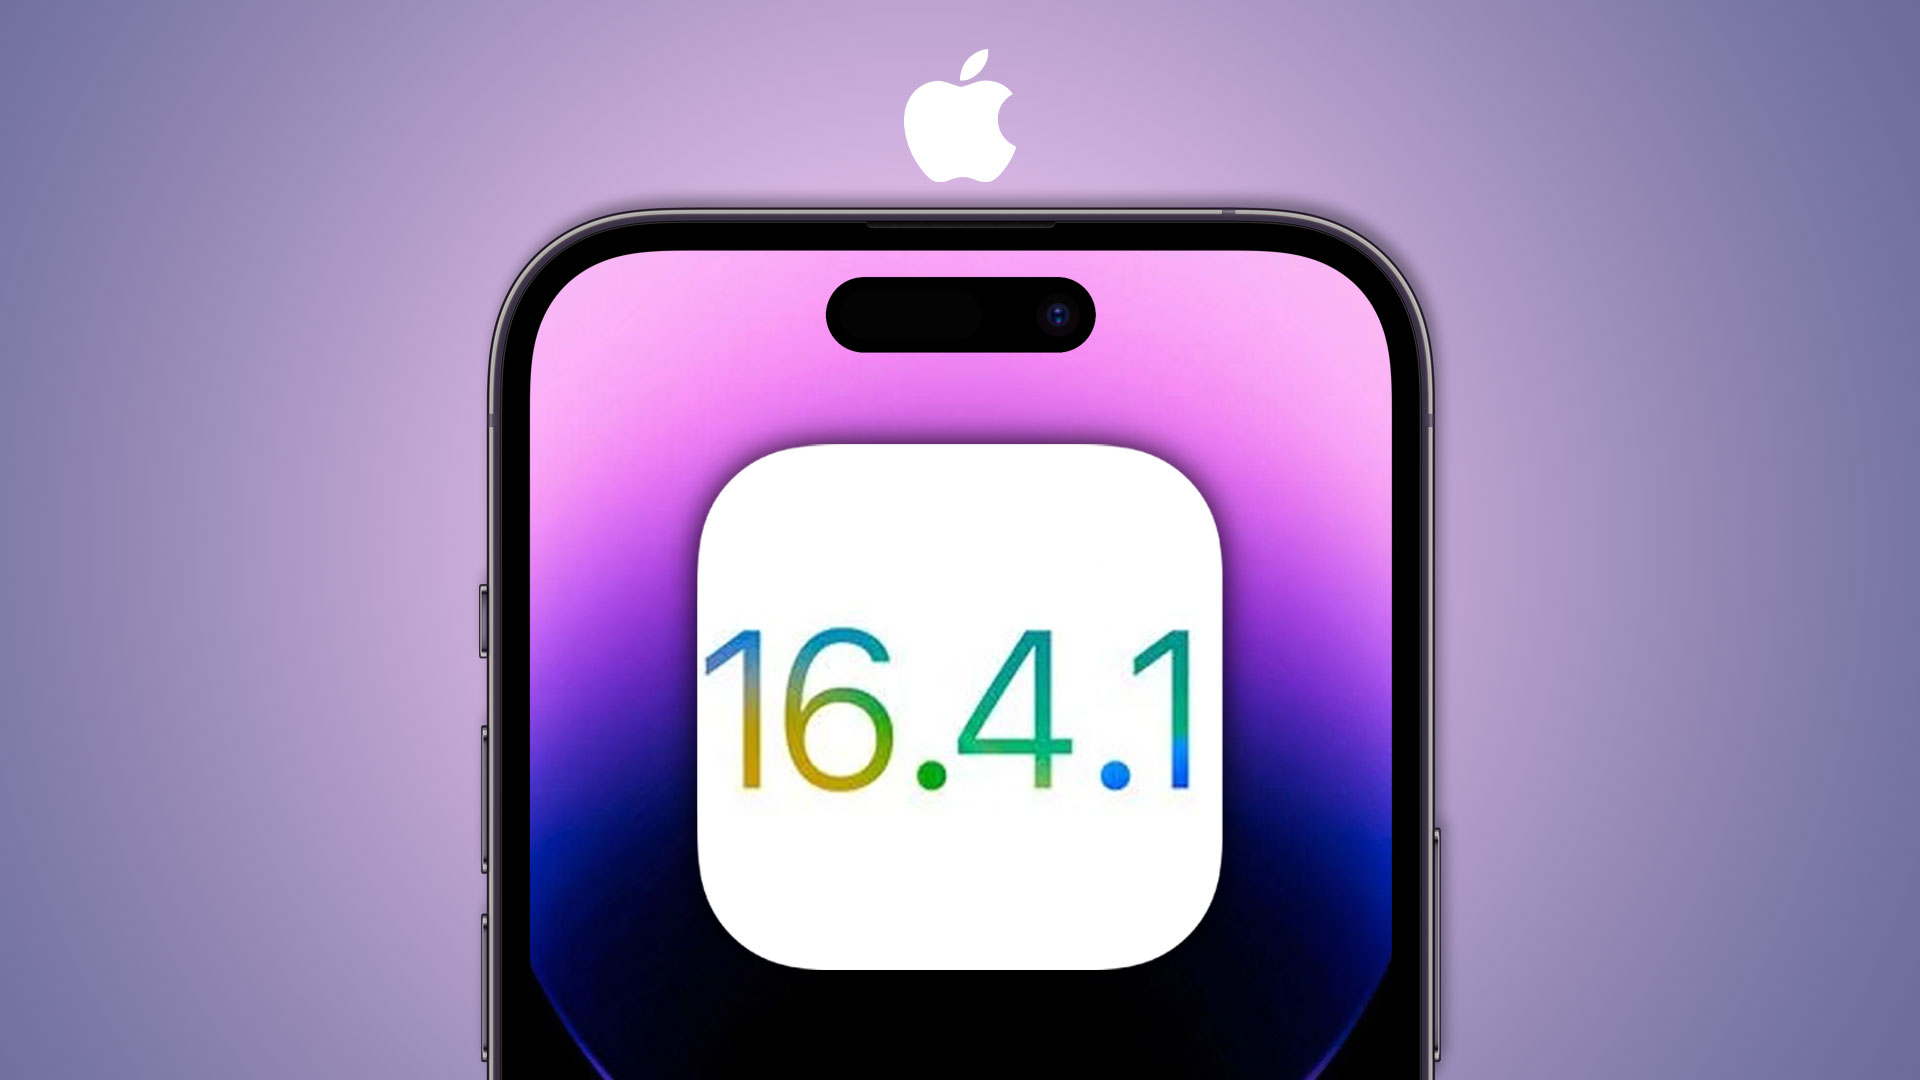 آپدیت آیفون به iOS 16.4.1